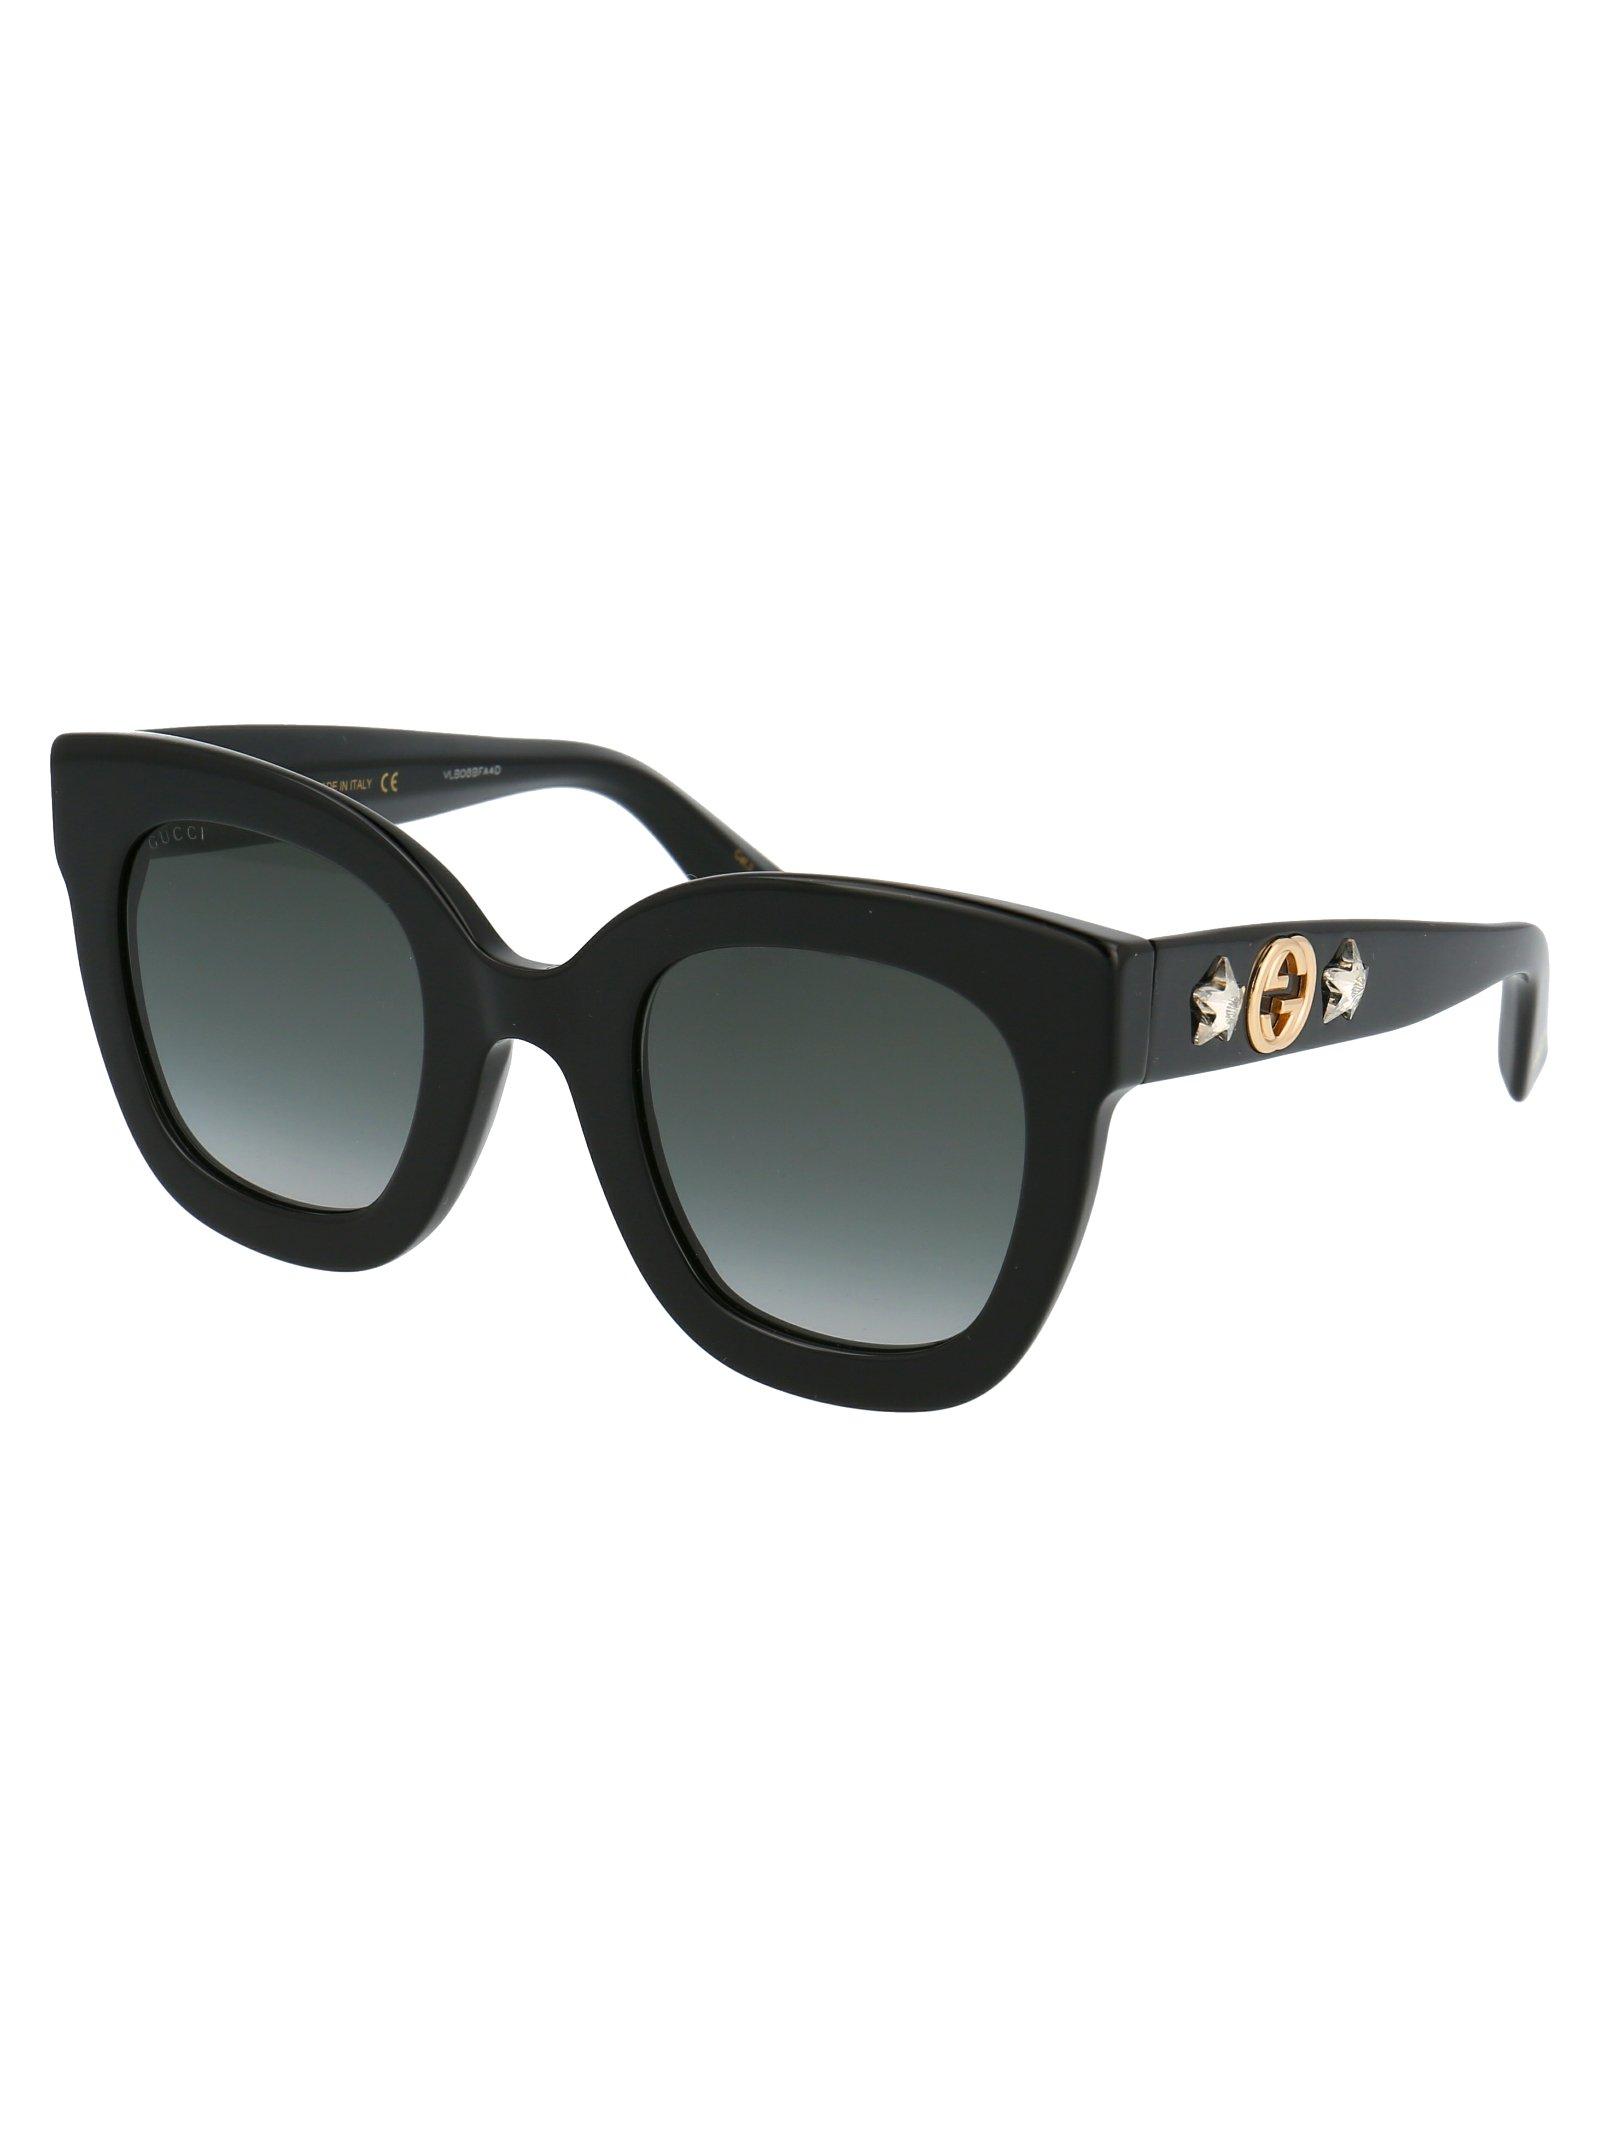 Gucci Monogram Star Cat-eye Sunglasses in Black - Lyst